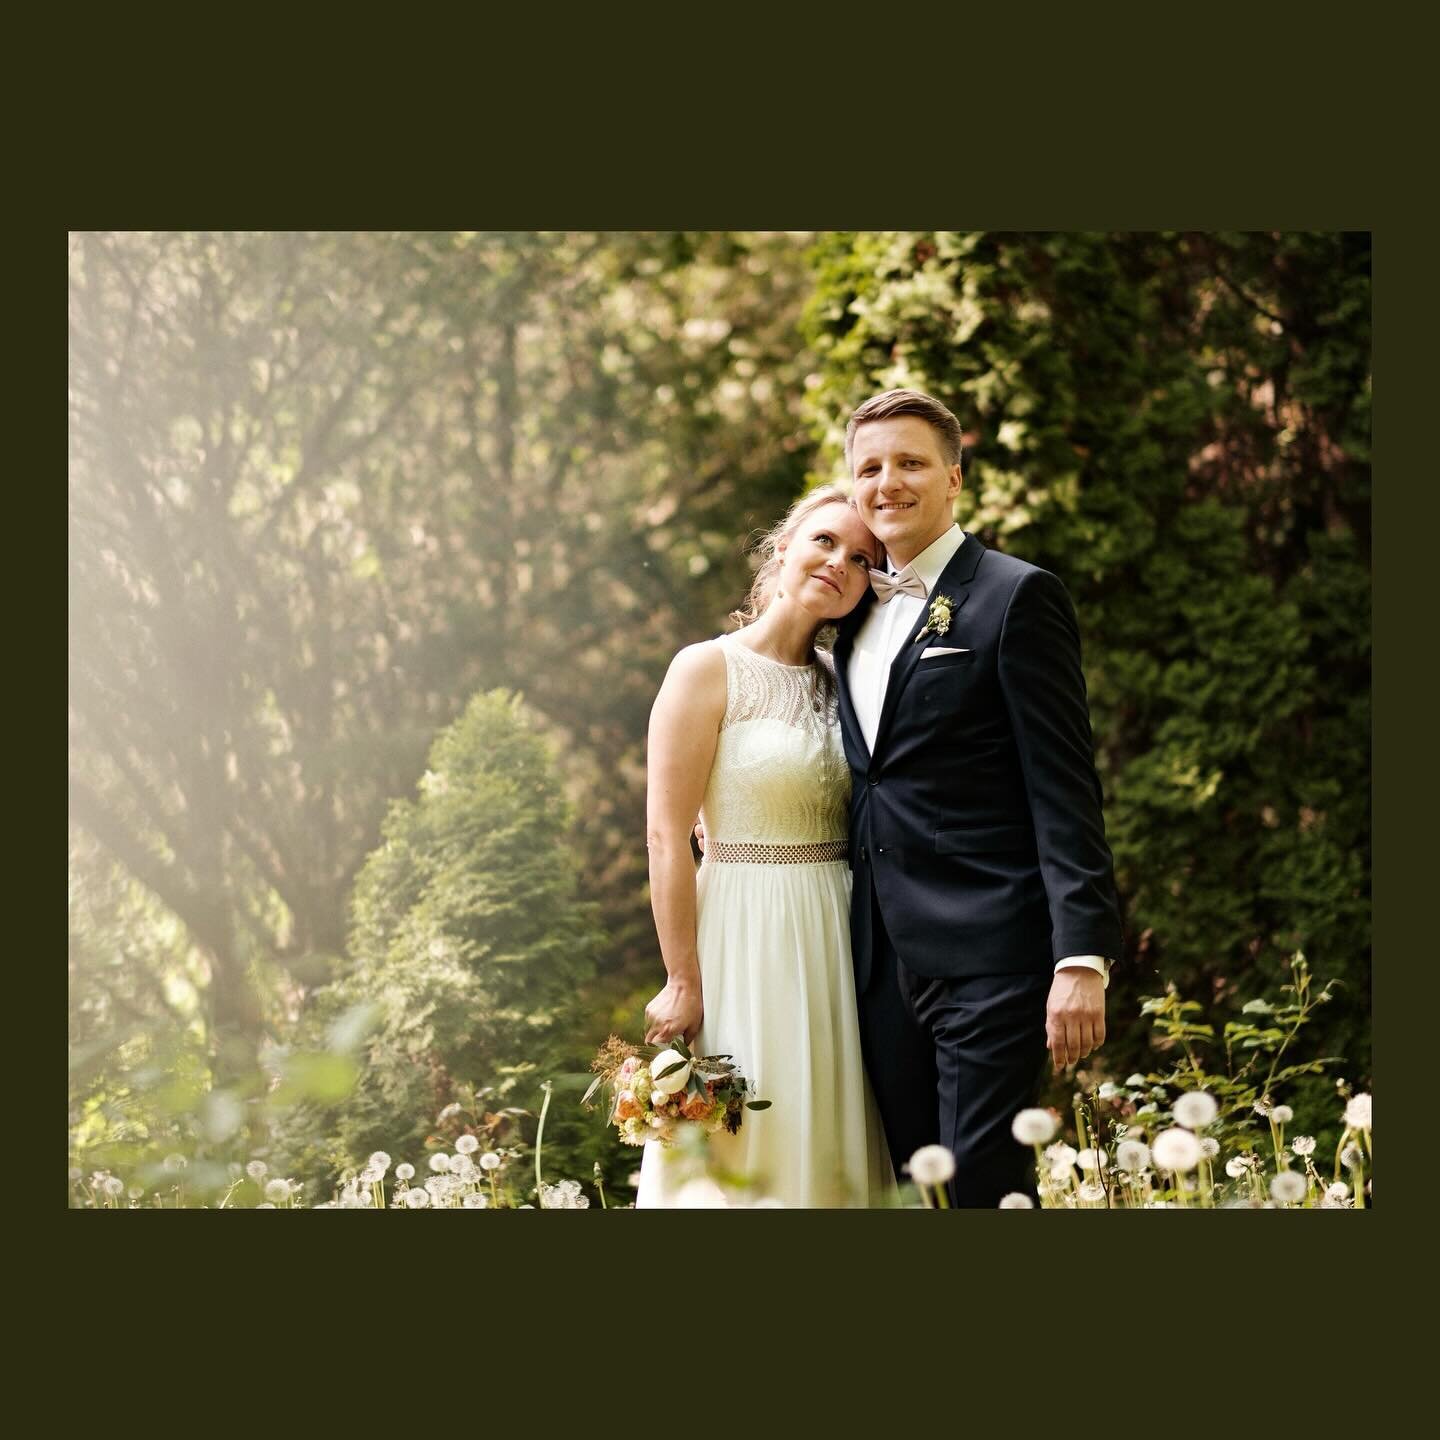 📸 Tag 353 des #Fotografie -Projekts &bdquo;365Augenblicke&ldquo; | Was denkst Du? #365augenblicke #menschen #momente #fotoreportage #weddingphotography #wedding